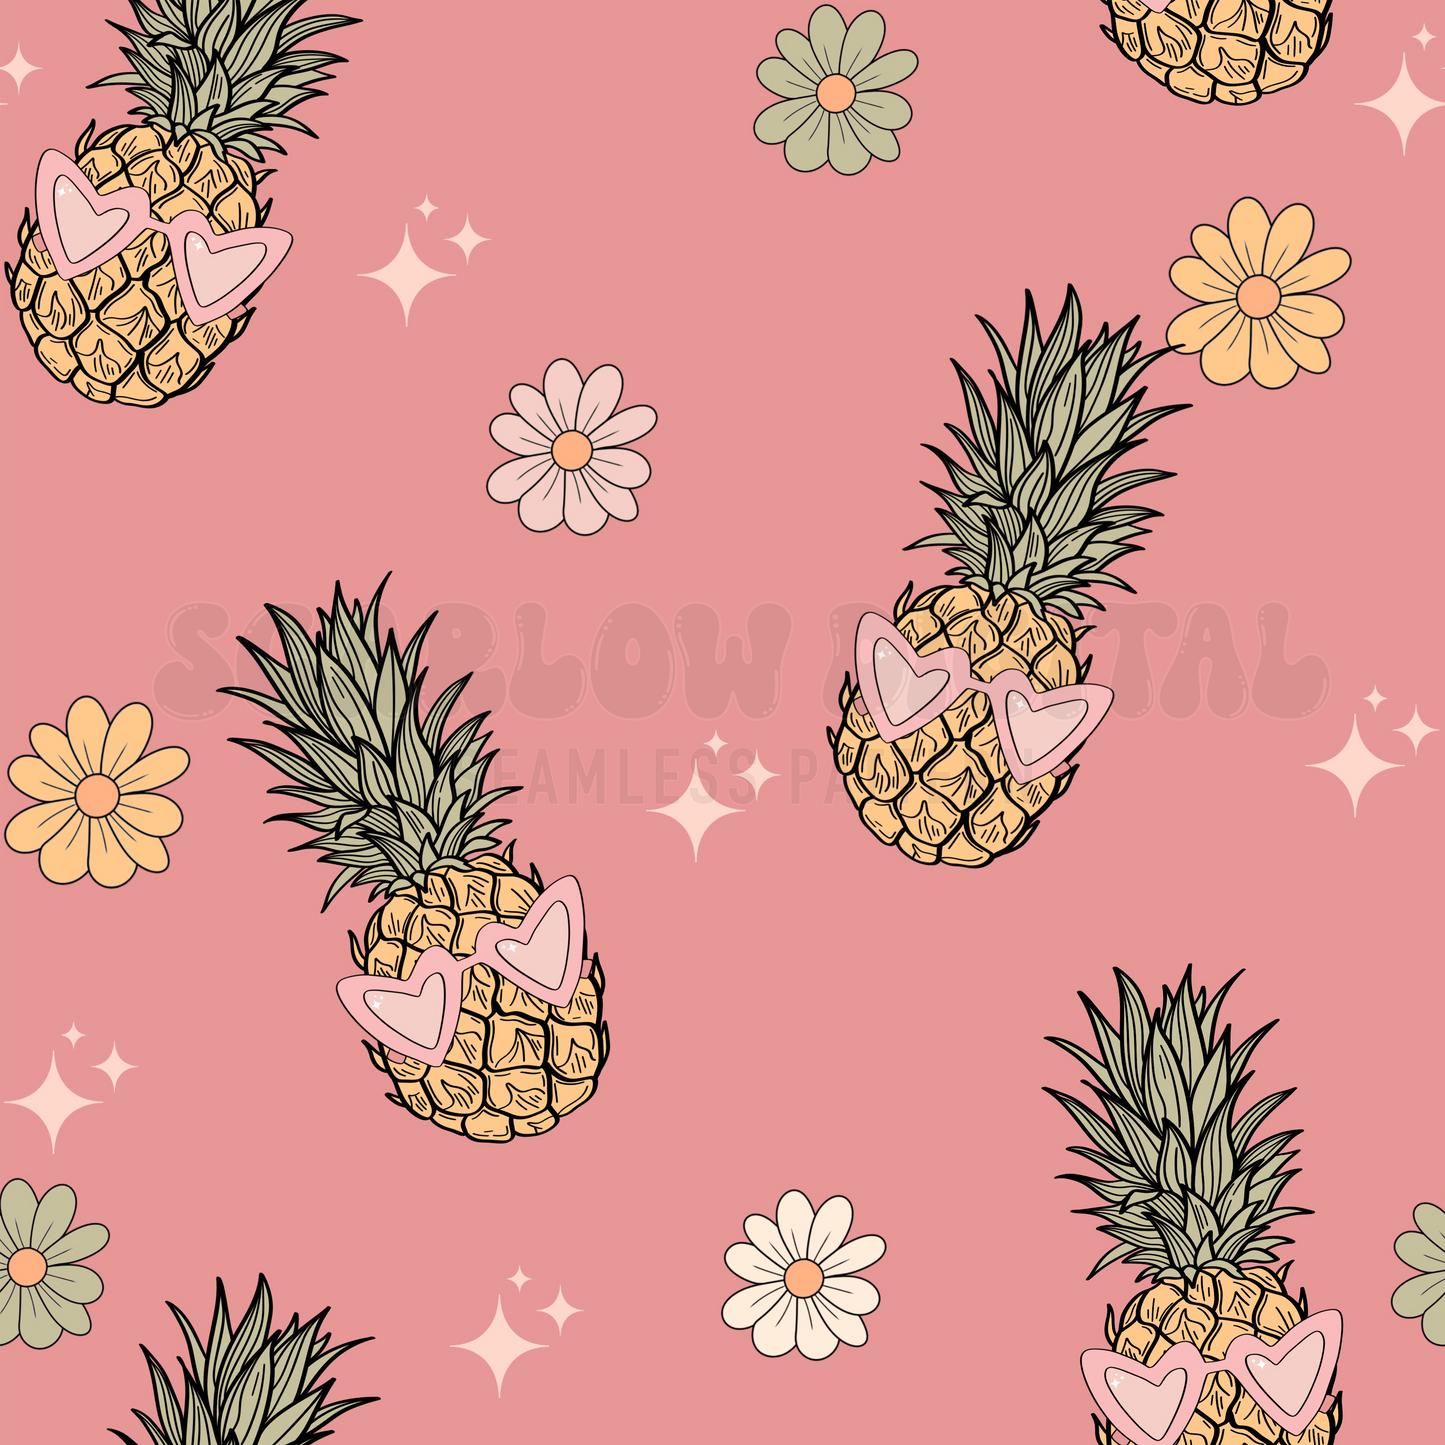 Pineapple Seamless File-Summer Vibes Sublimation Digital Design Download-summertime seamless file, sunglasses seamless file, floral design